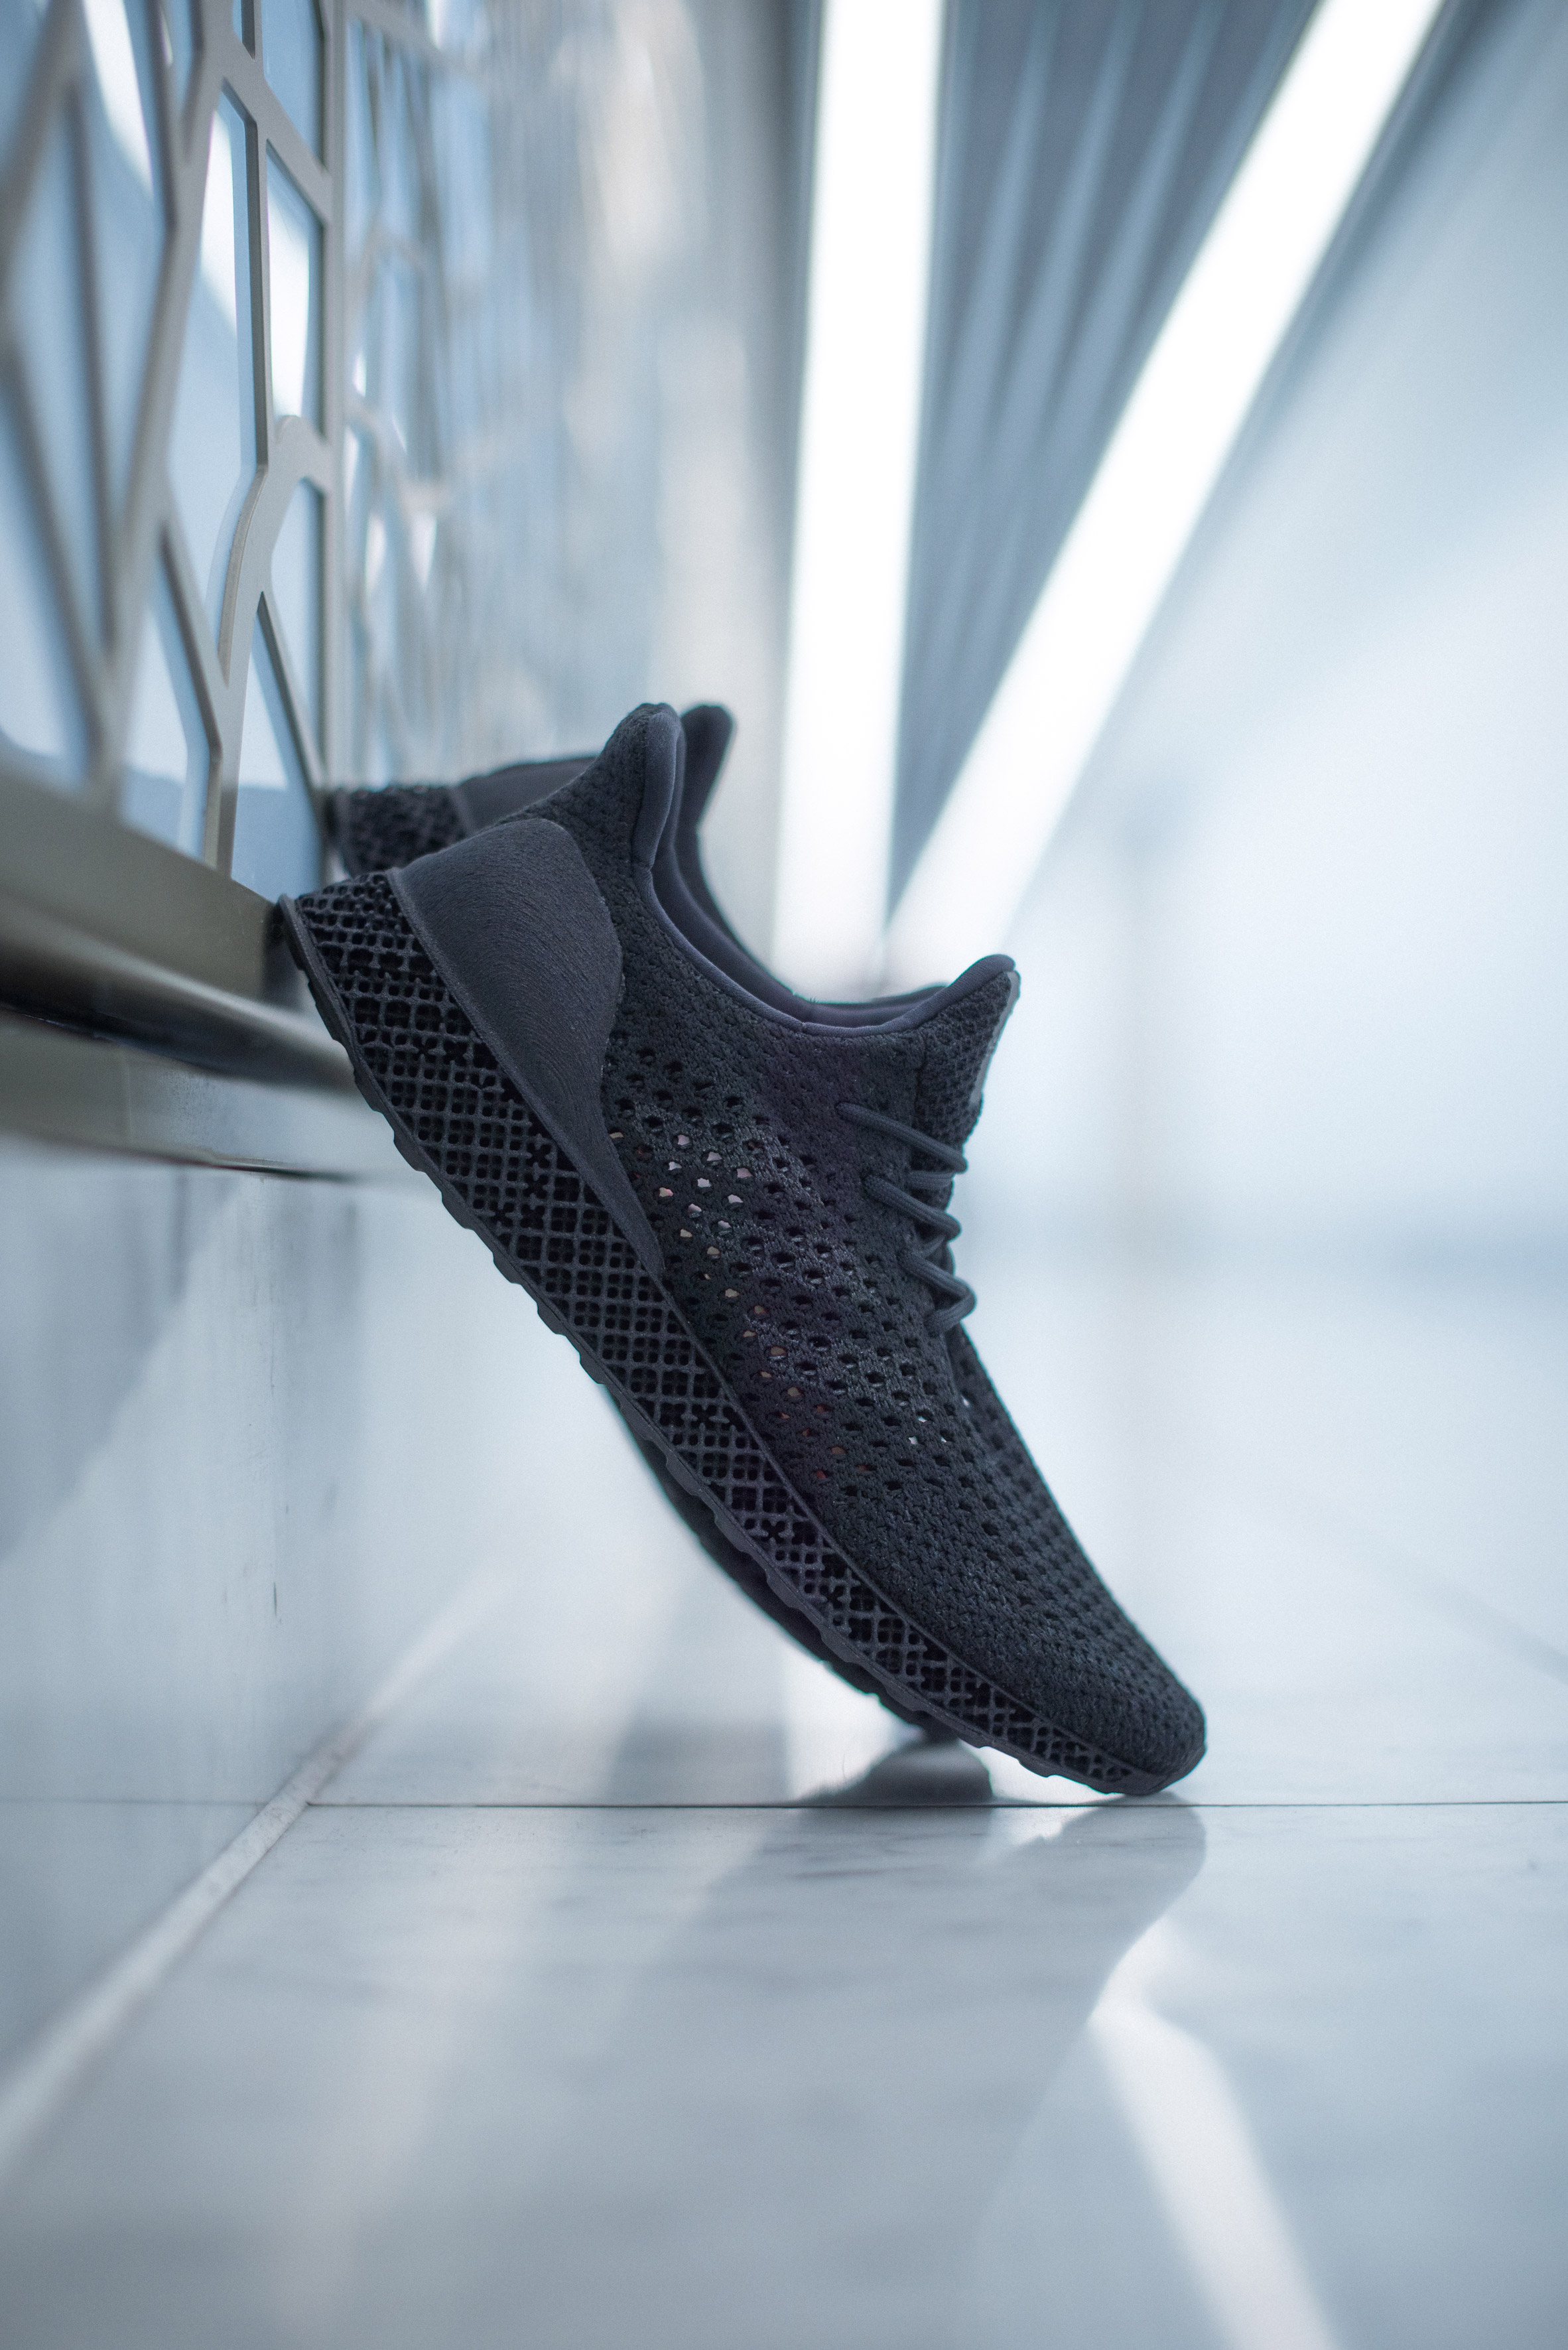 Uitgaand Gespecificeerd Melodramatisch 3D-printed Adidas trainers go on sale